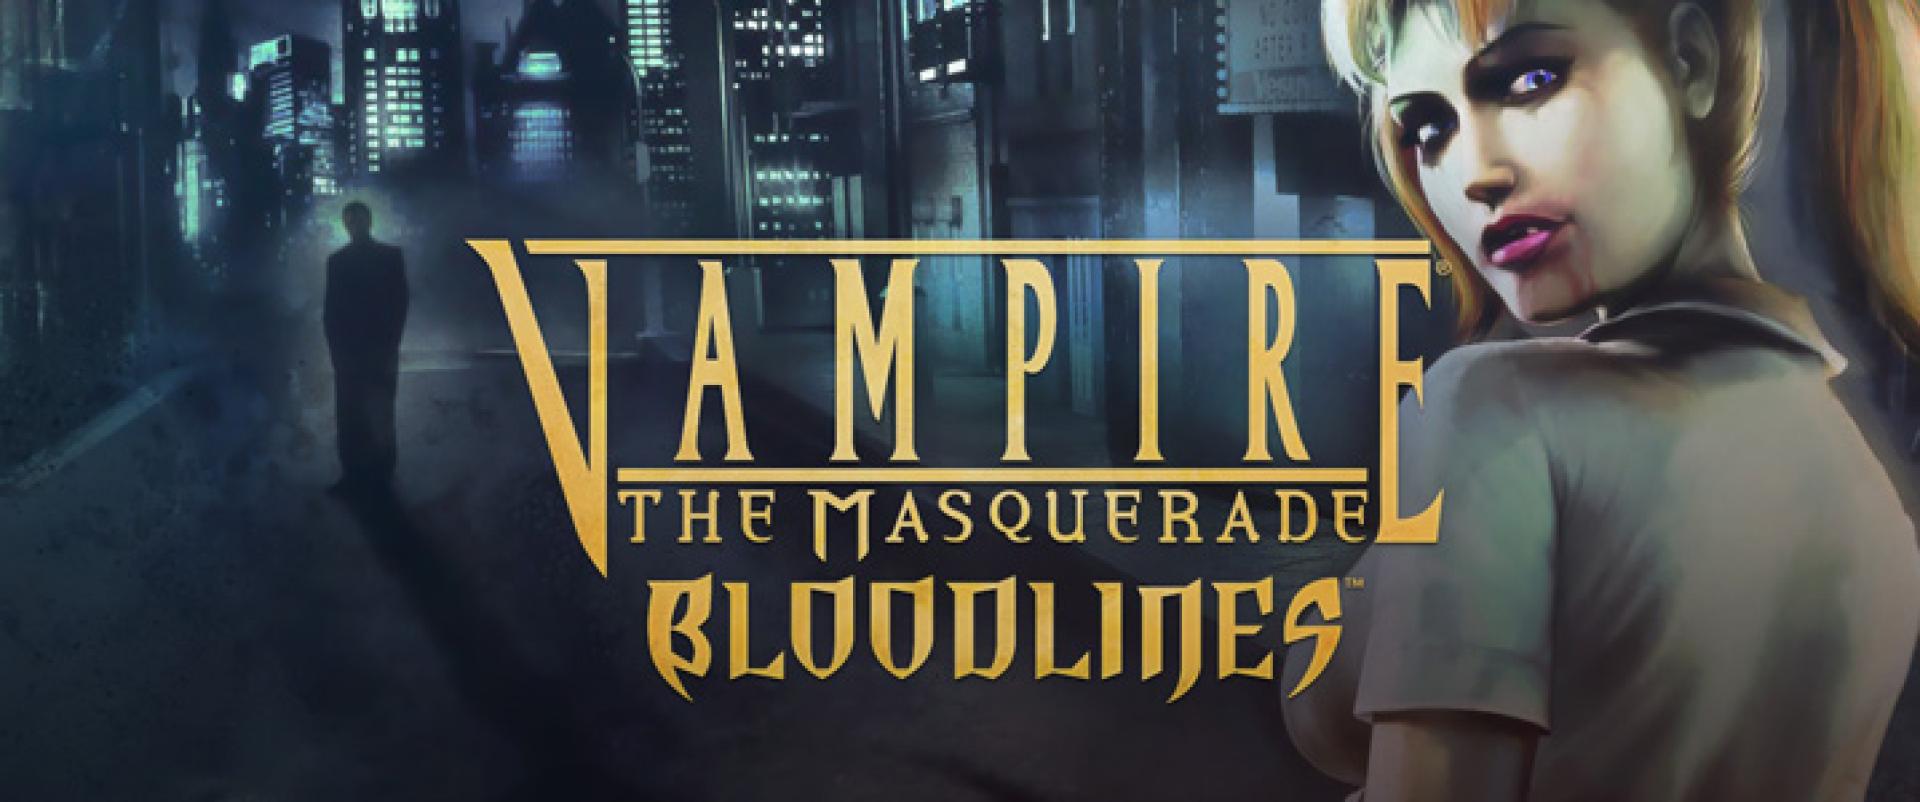 Vampire: The Masquerade - Bloodlines (2004)